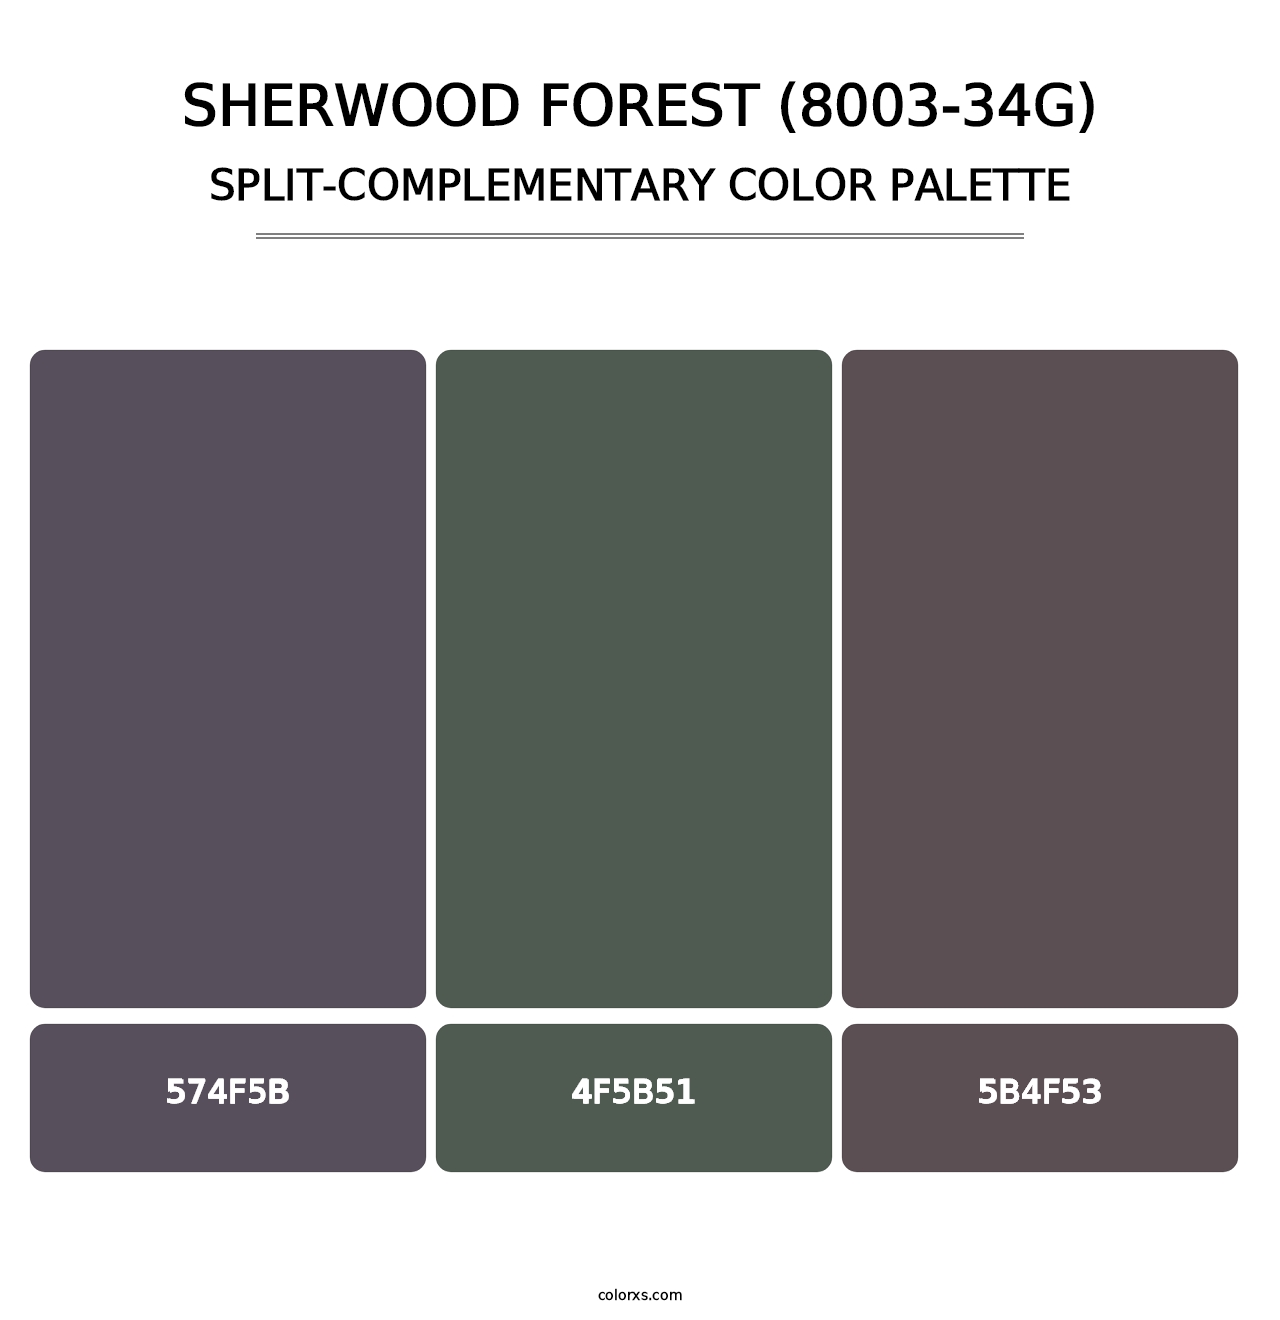 Sherwood Forest (8003-34G) - Split-Complementary Color Palette